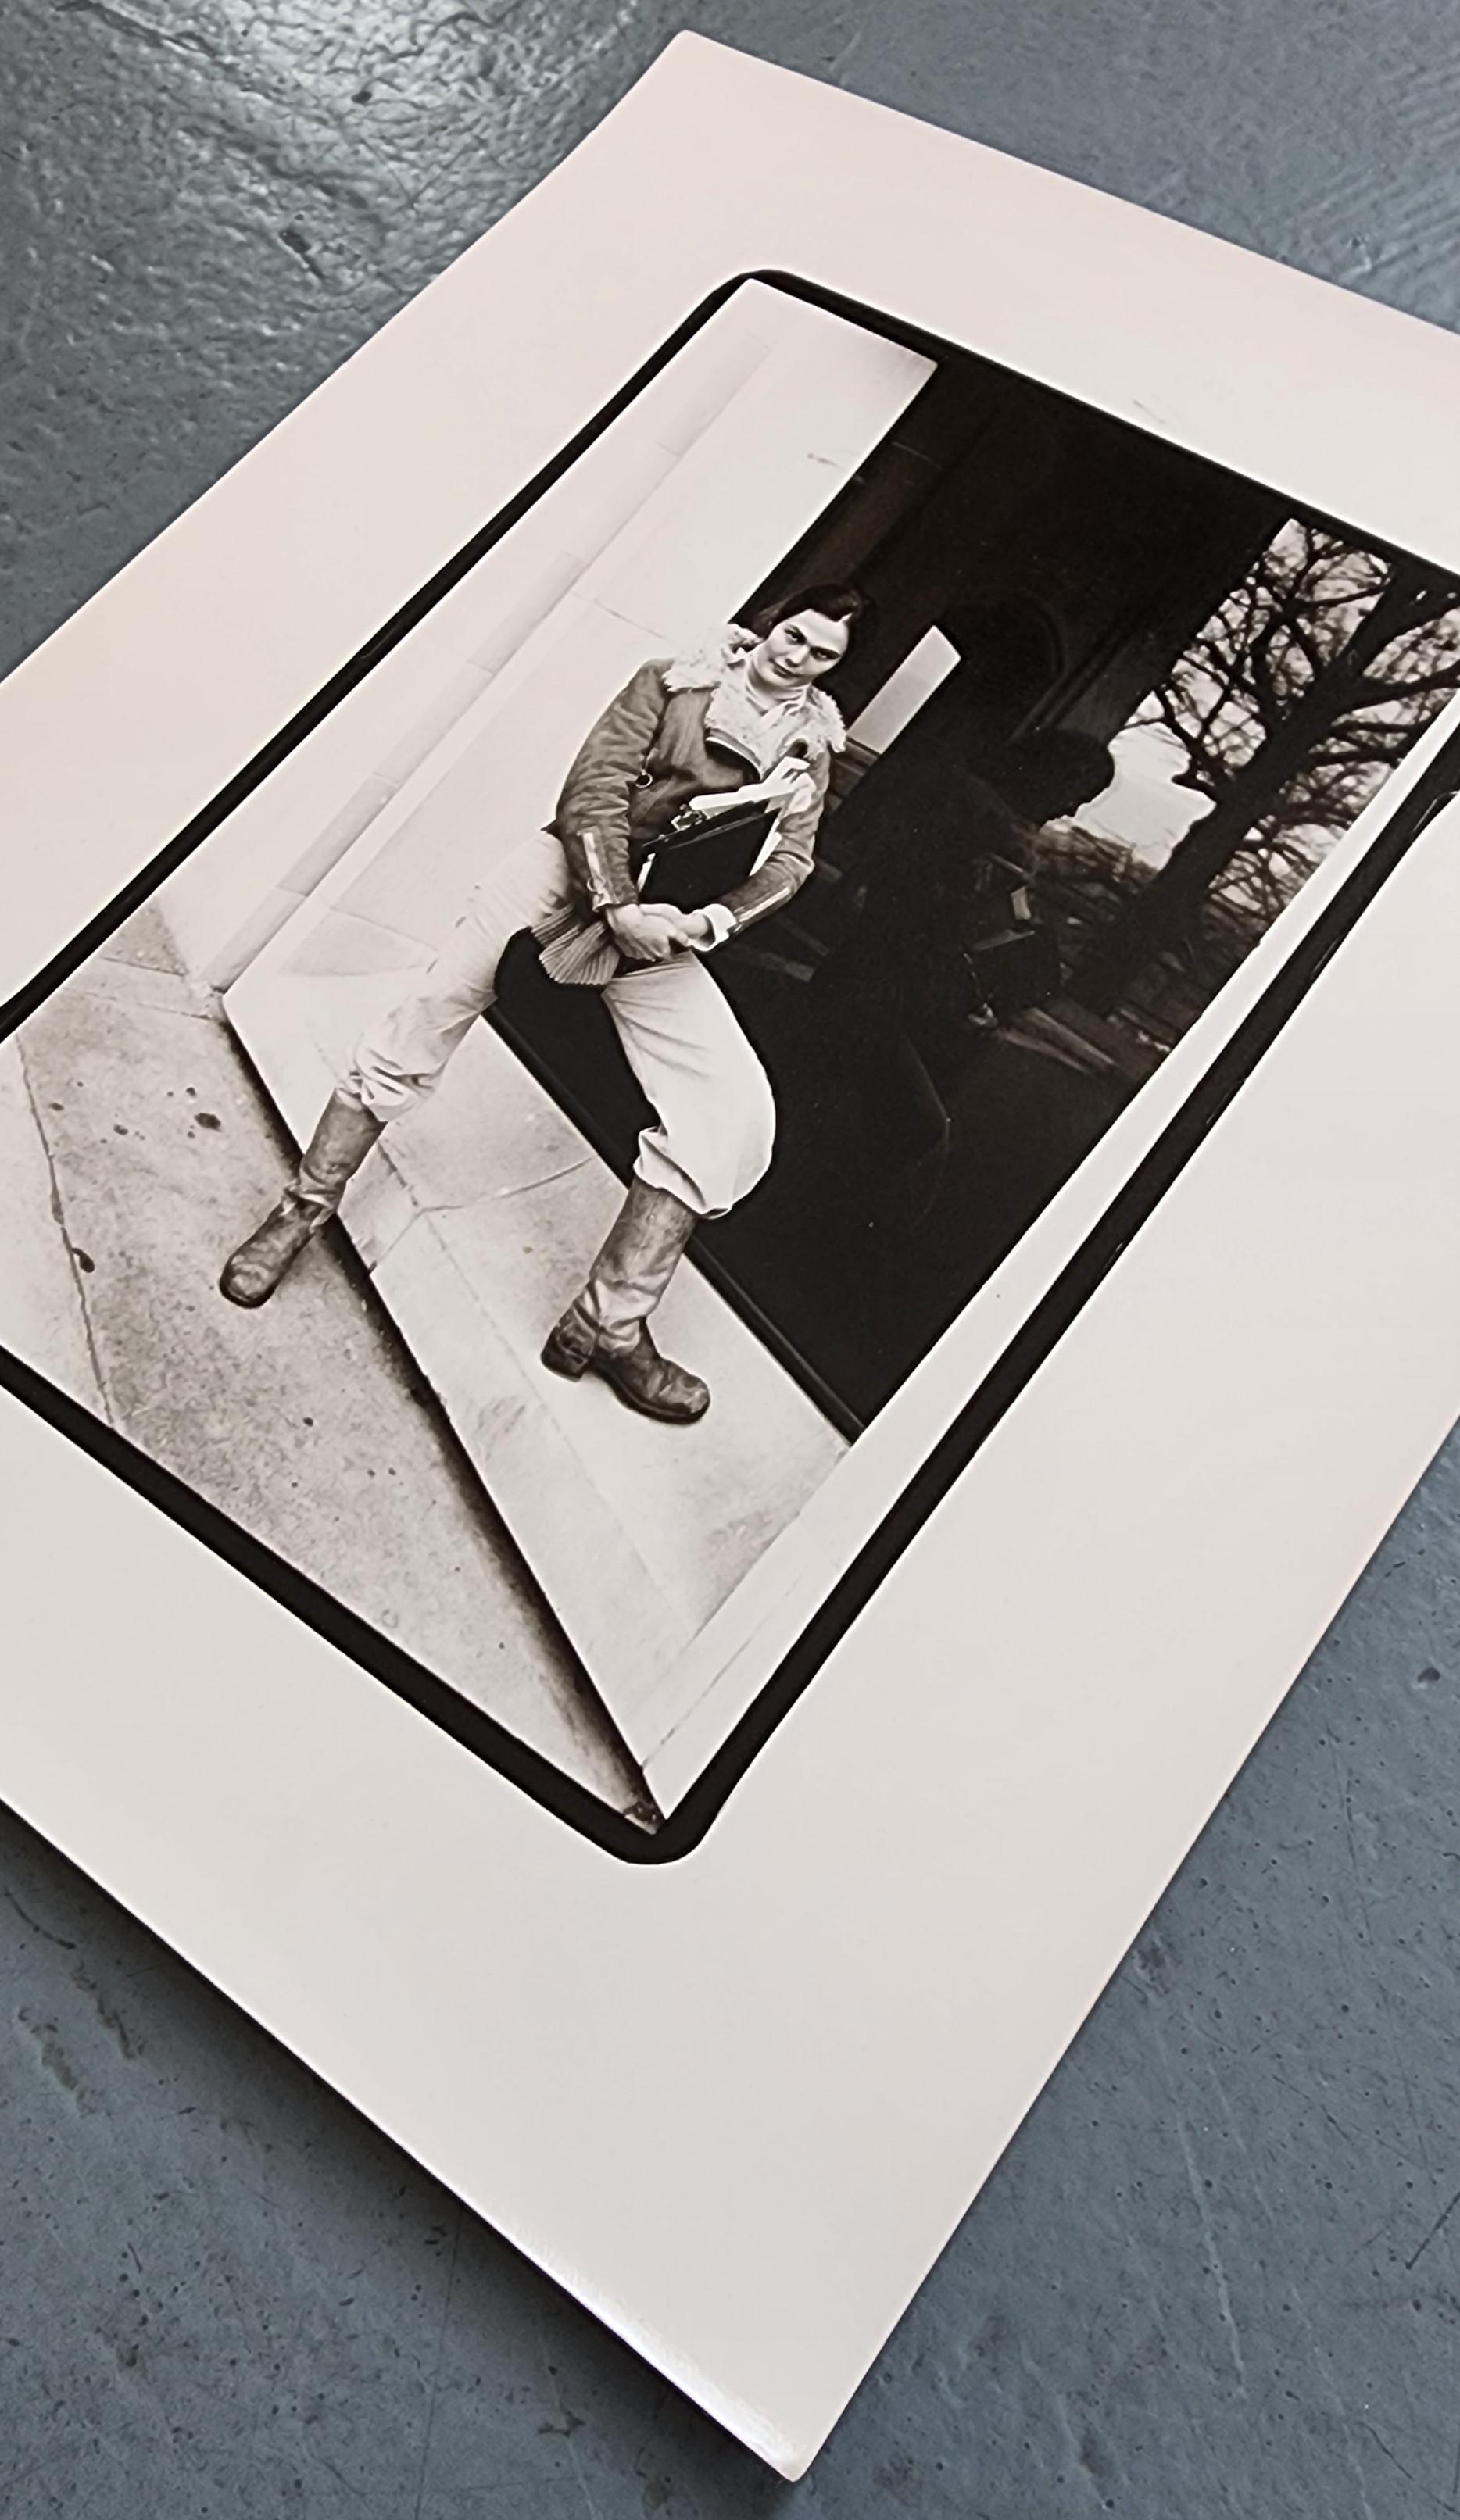 Joe Kelly
Untitled Portrait I
Black and White Photograph
Year: circa late 70s 
Image Size: 7x5.5in
Sheet Size: 10x8in
Unsigned
Ref.: 924802-1710

Tags: B&W, Black and White, Photography, Portrait, Model, New York City, Iconic, 70s 

Joseph J. Kelly